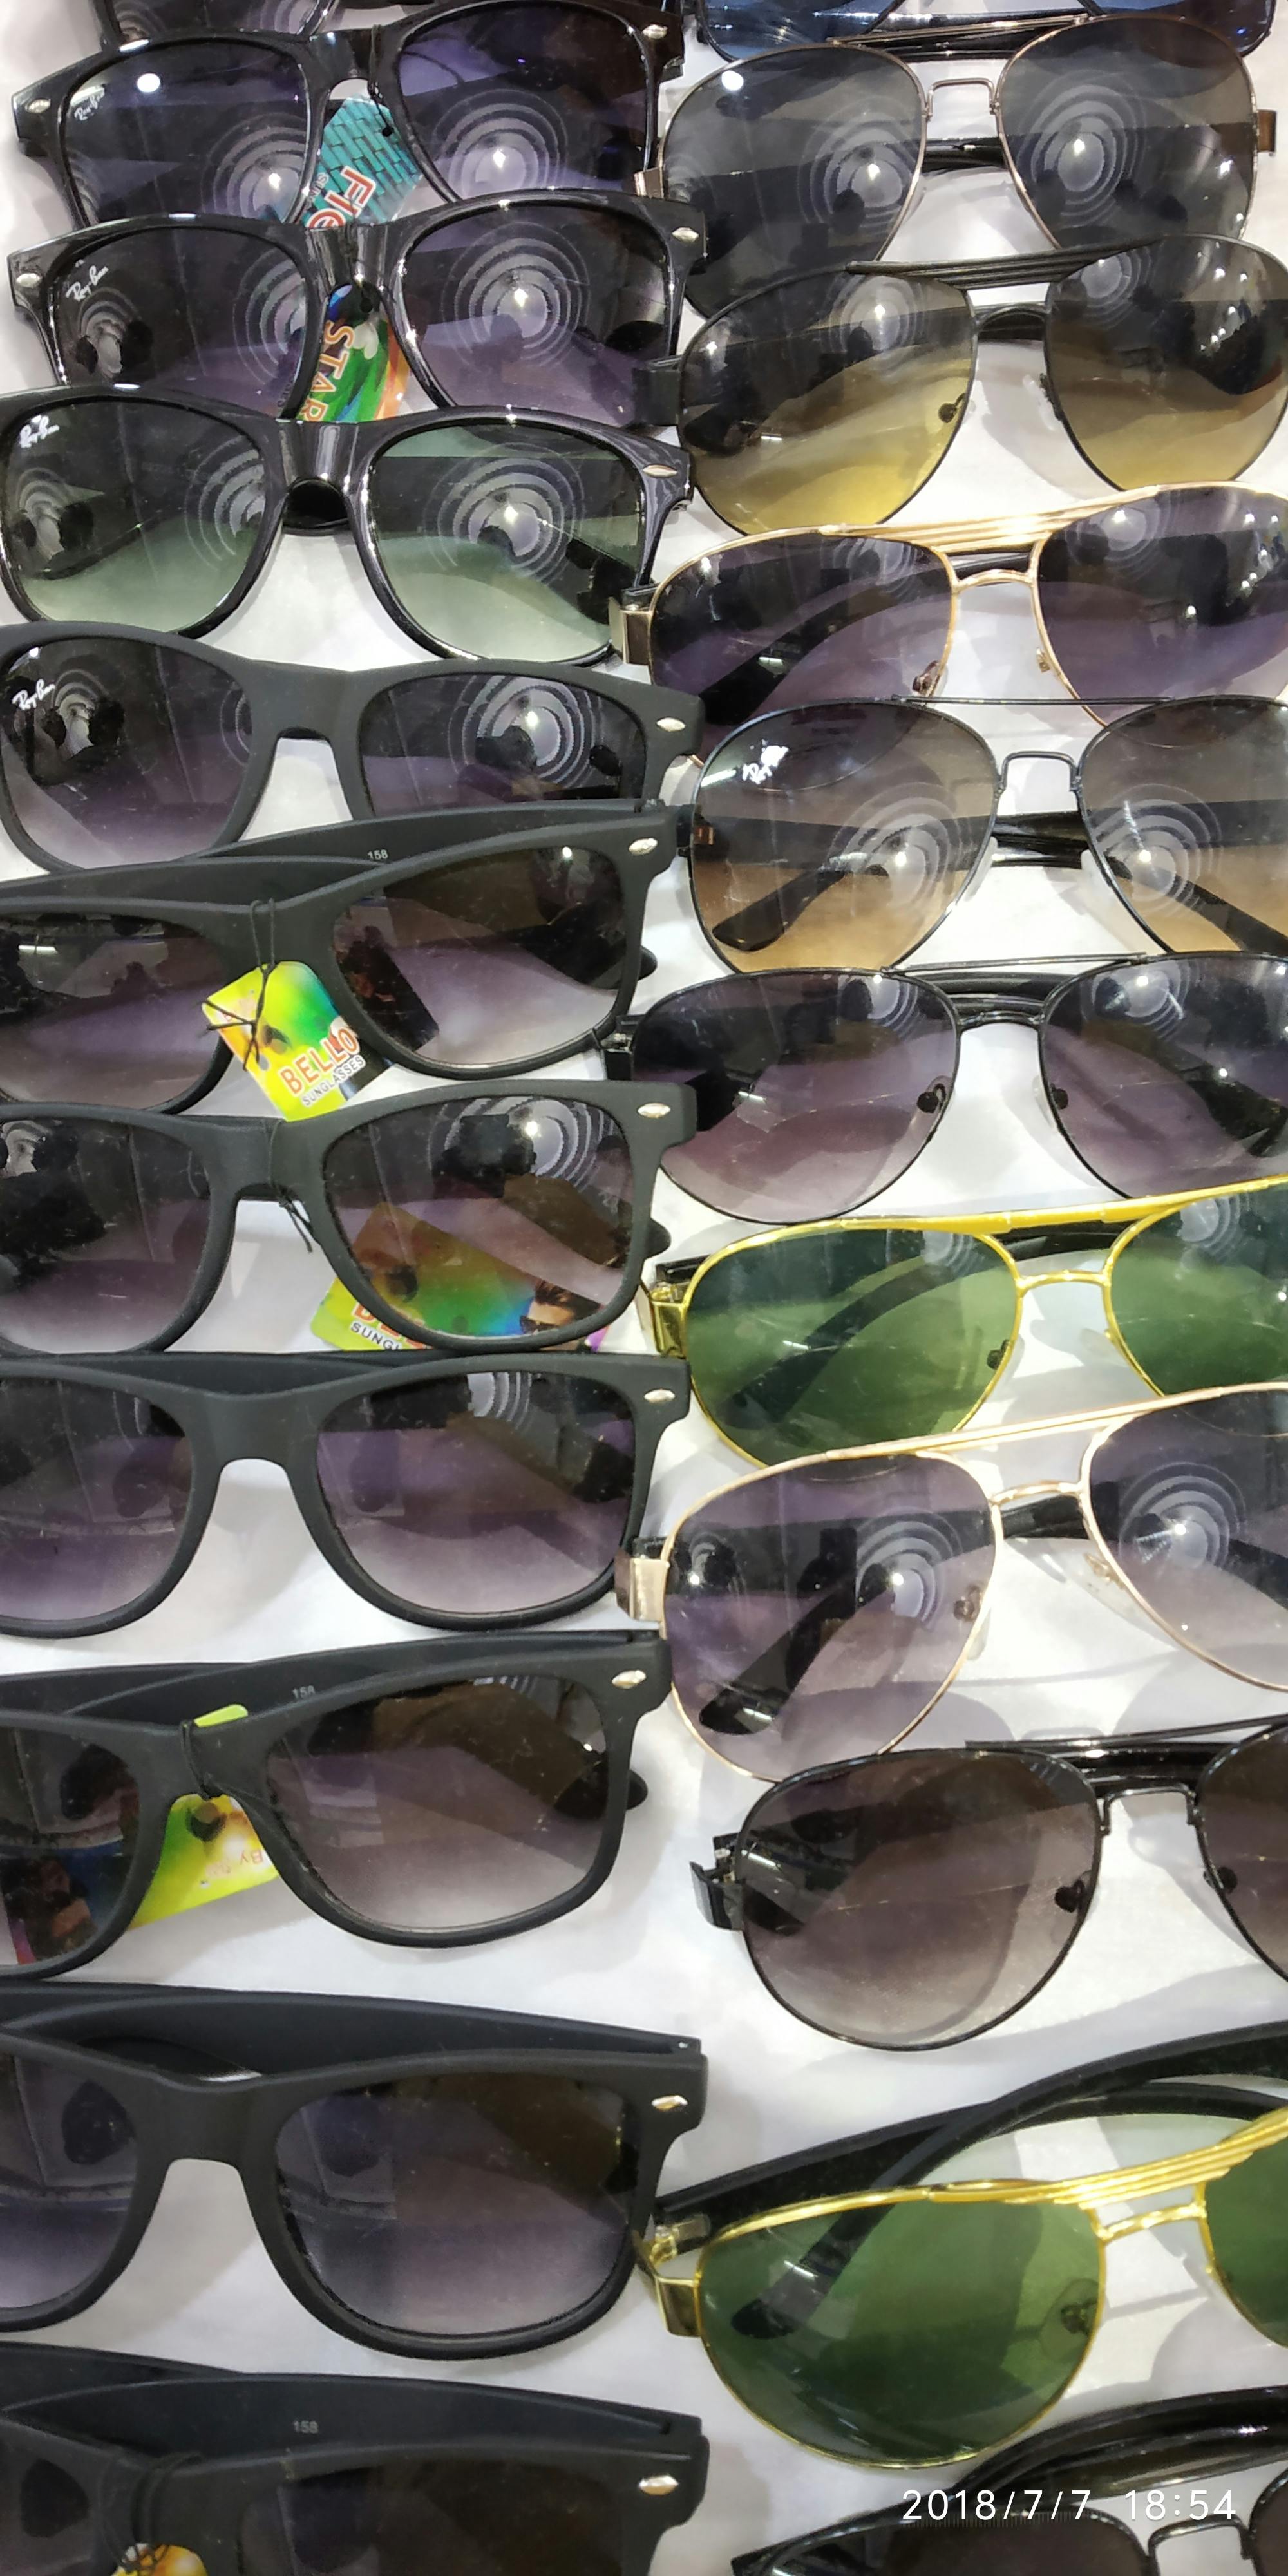 Free stock photo of colorful sunglasses, eye glasses, eyeglasses